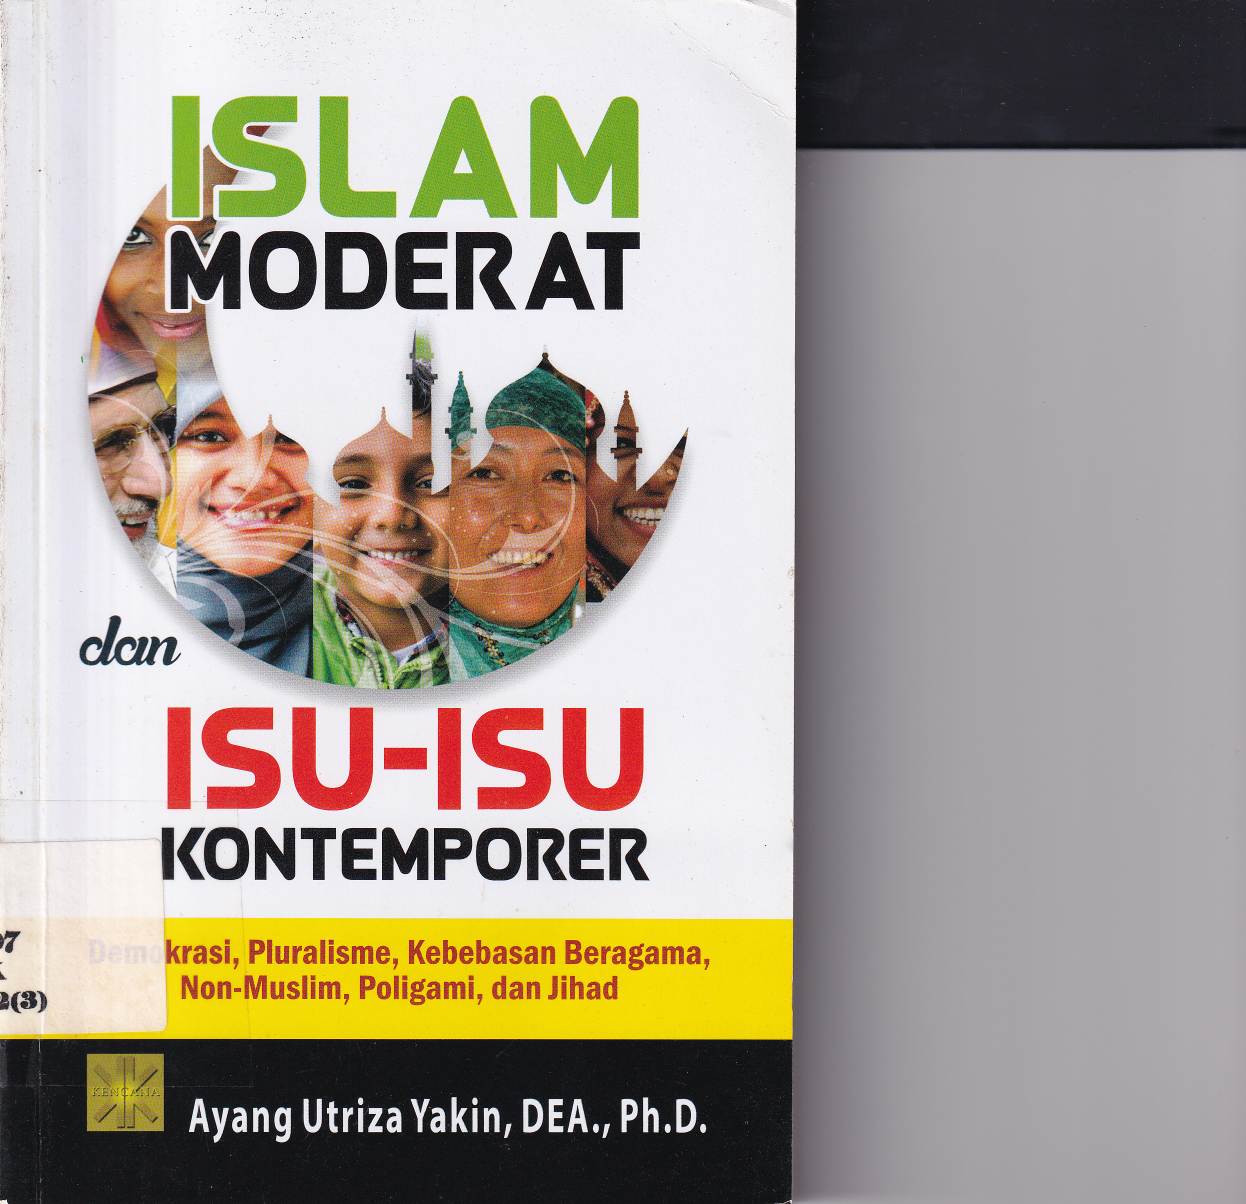 Islam Moderat dan Isu-Isu Kontemporer